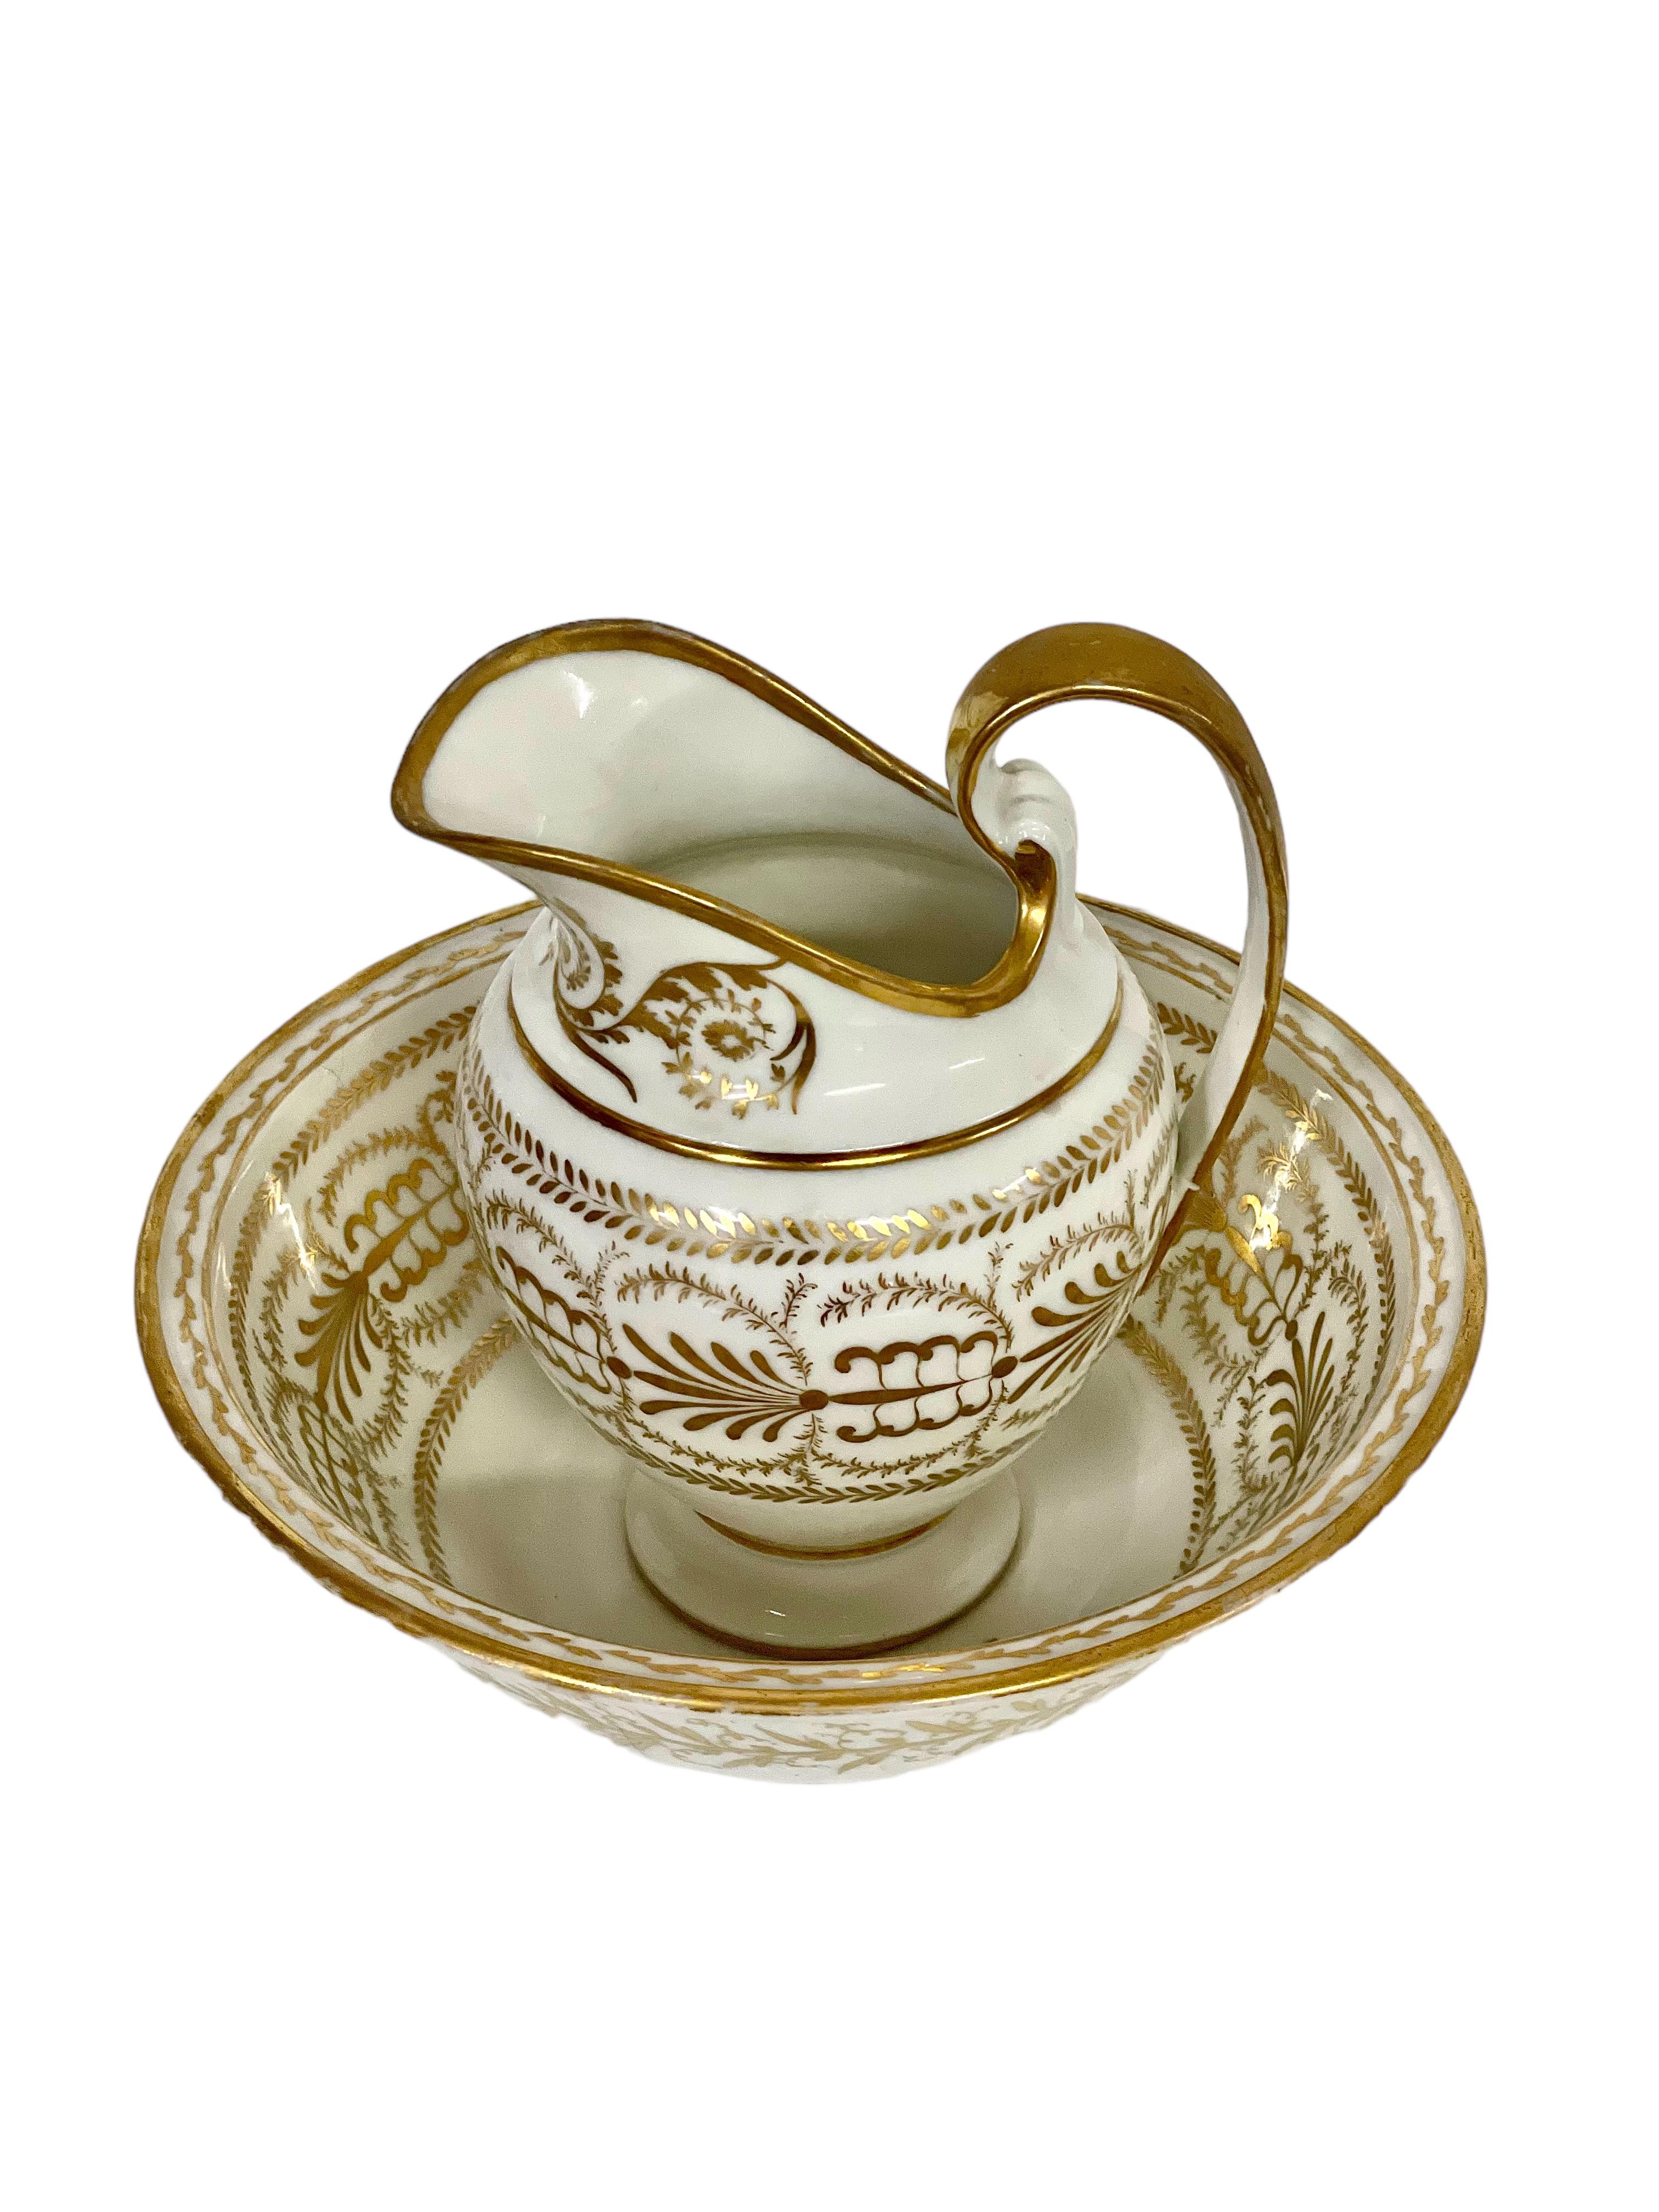 19th Century Old Paris Porcelain Wash Jug and Basin with Gilt Decoration For Sale